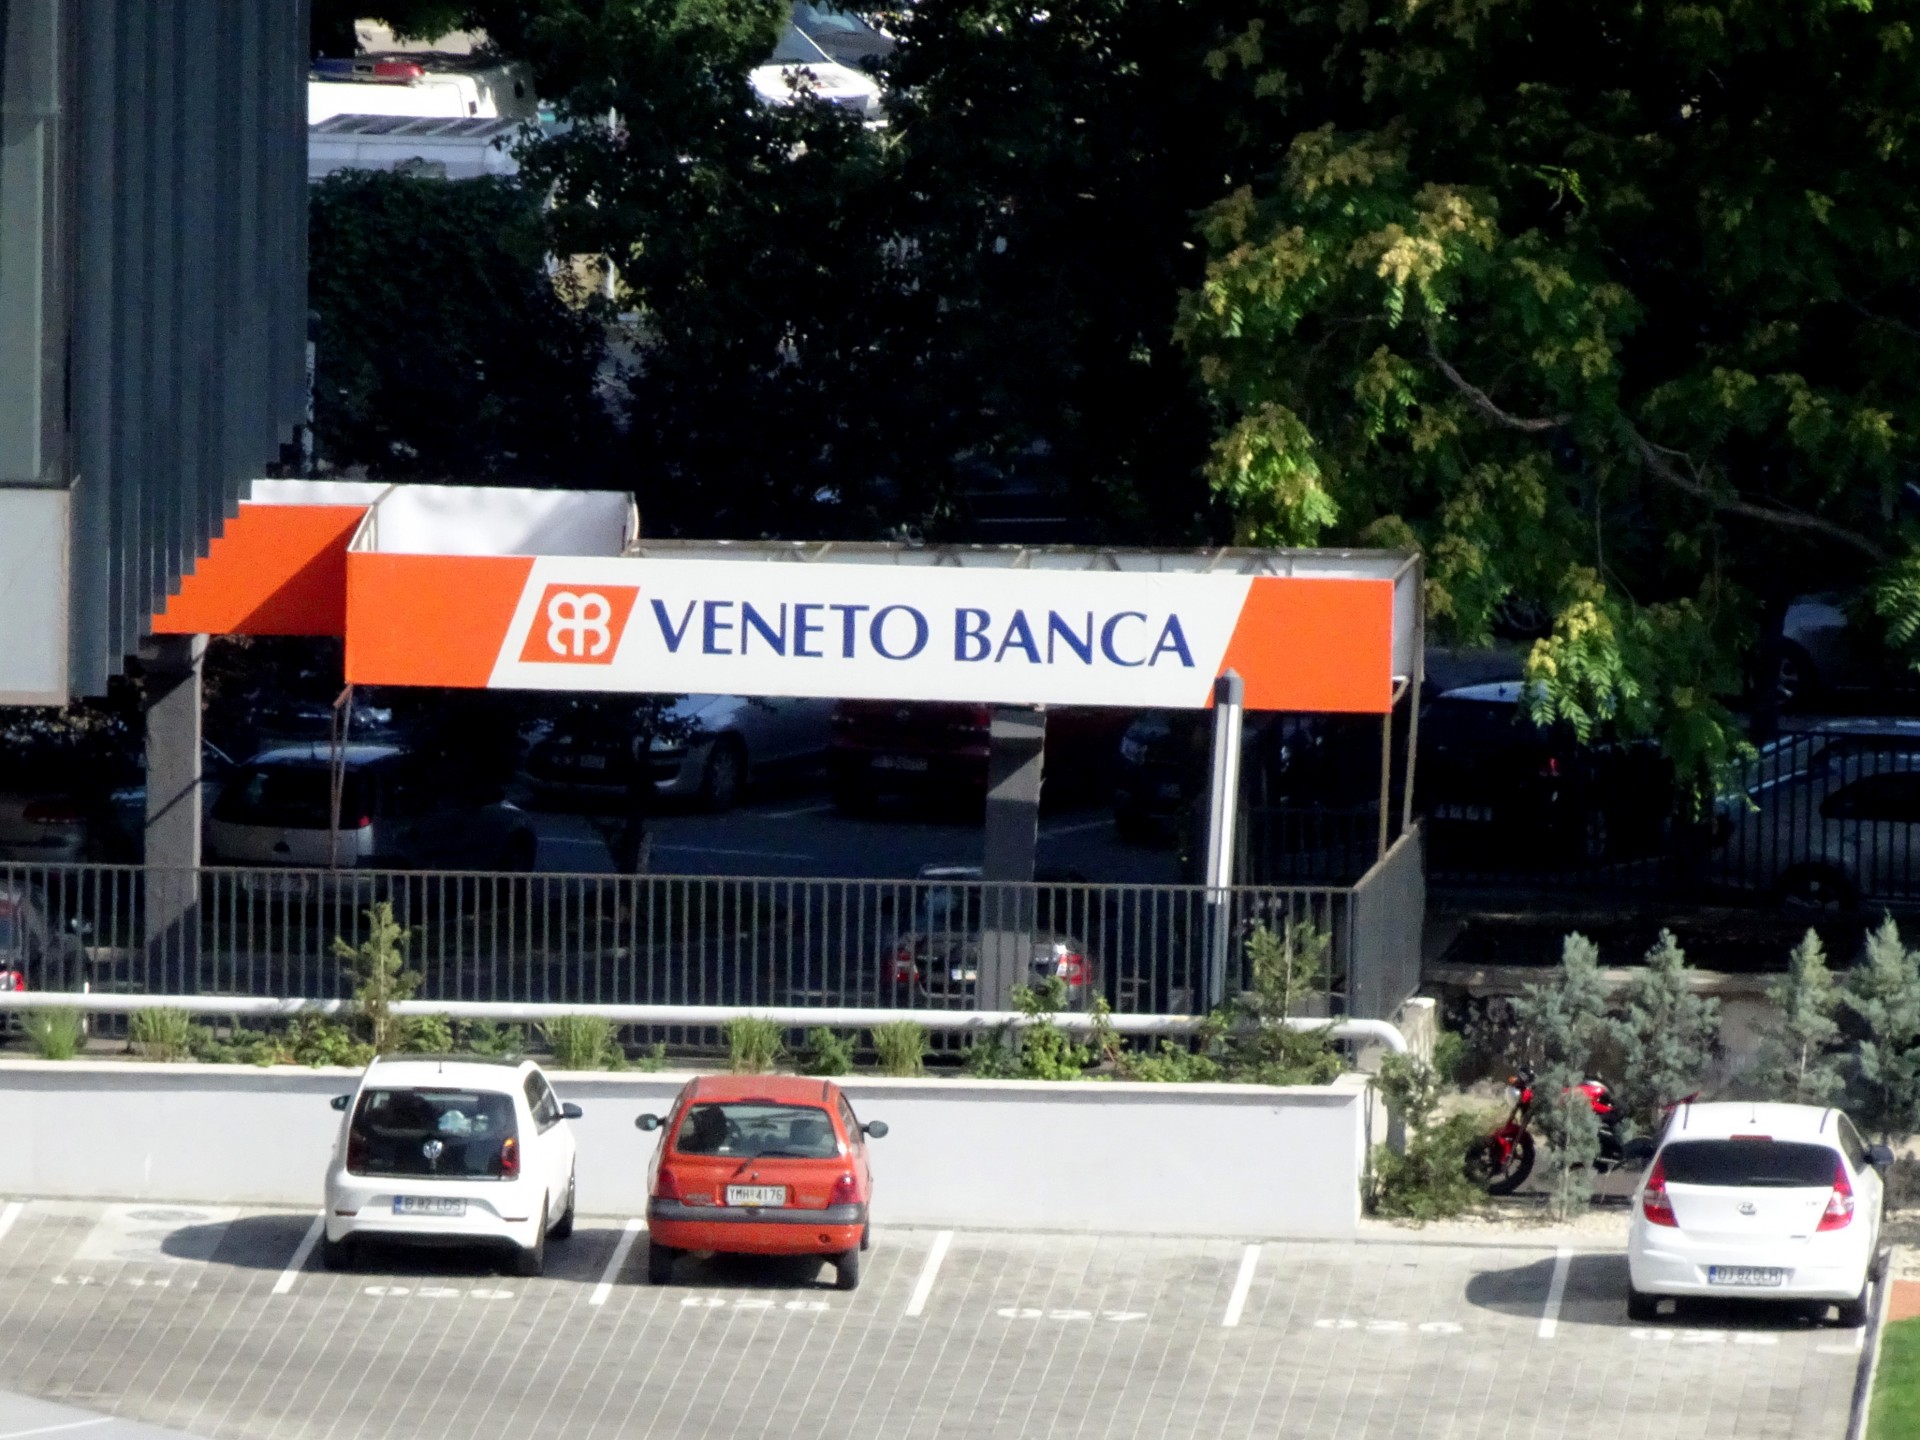 VENETO BANCA - firme din zona corporatista Pipera